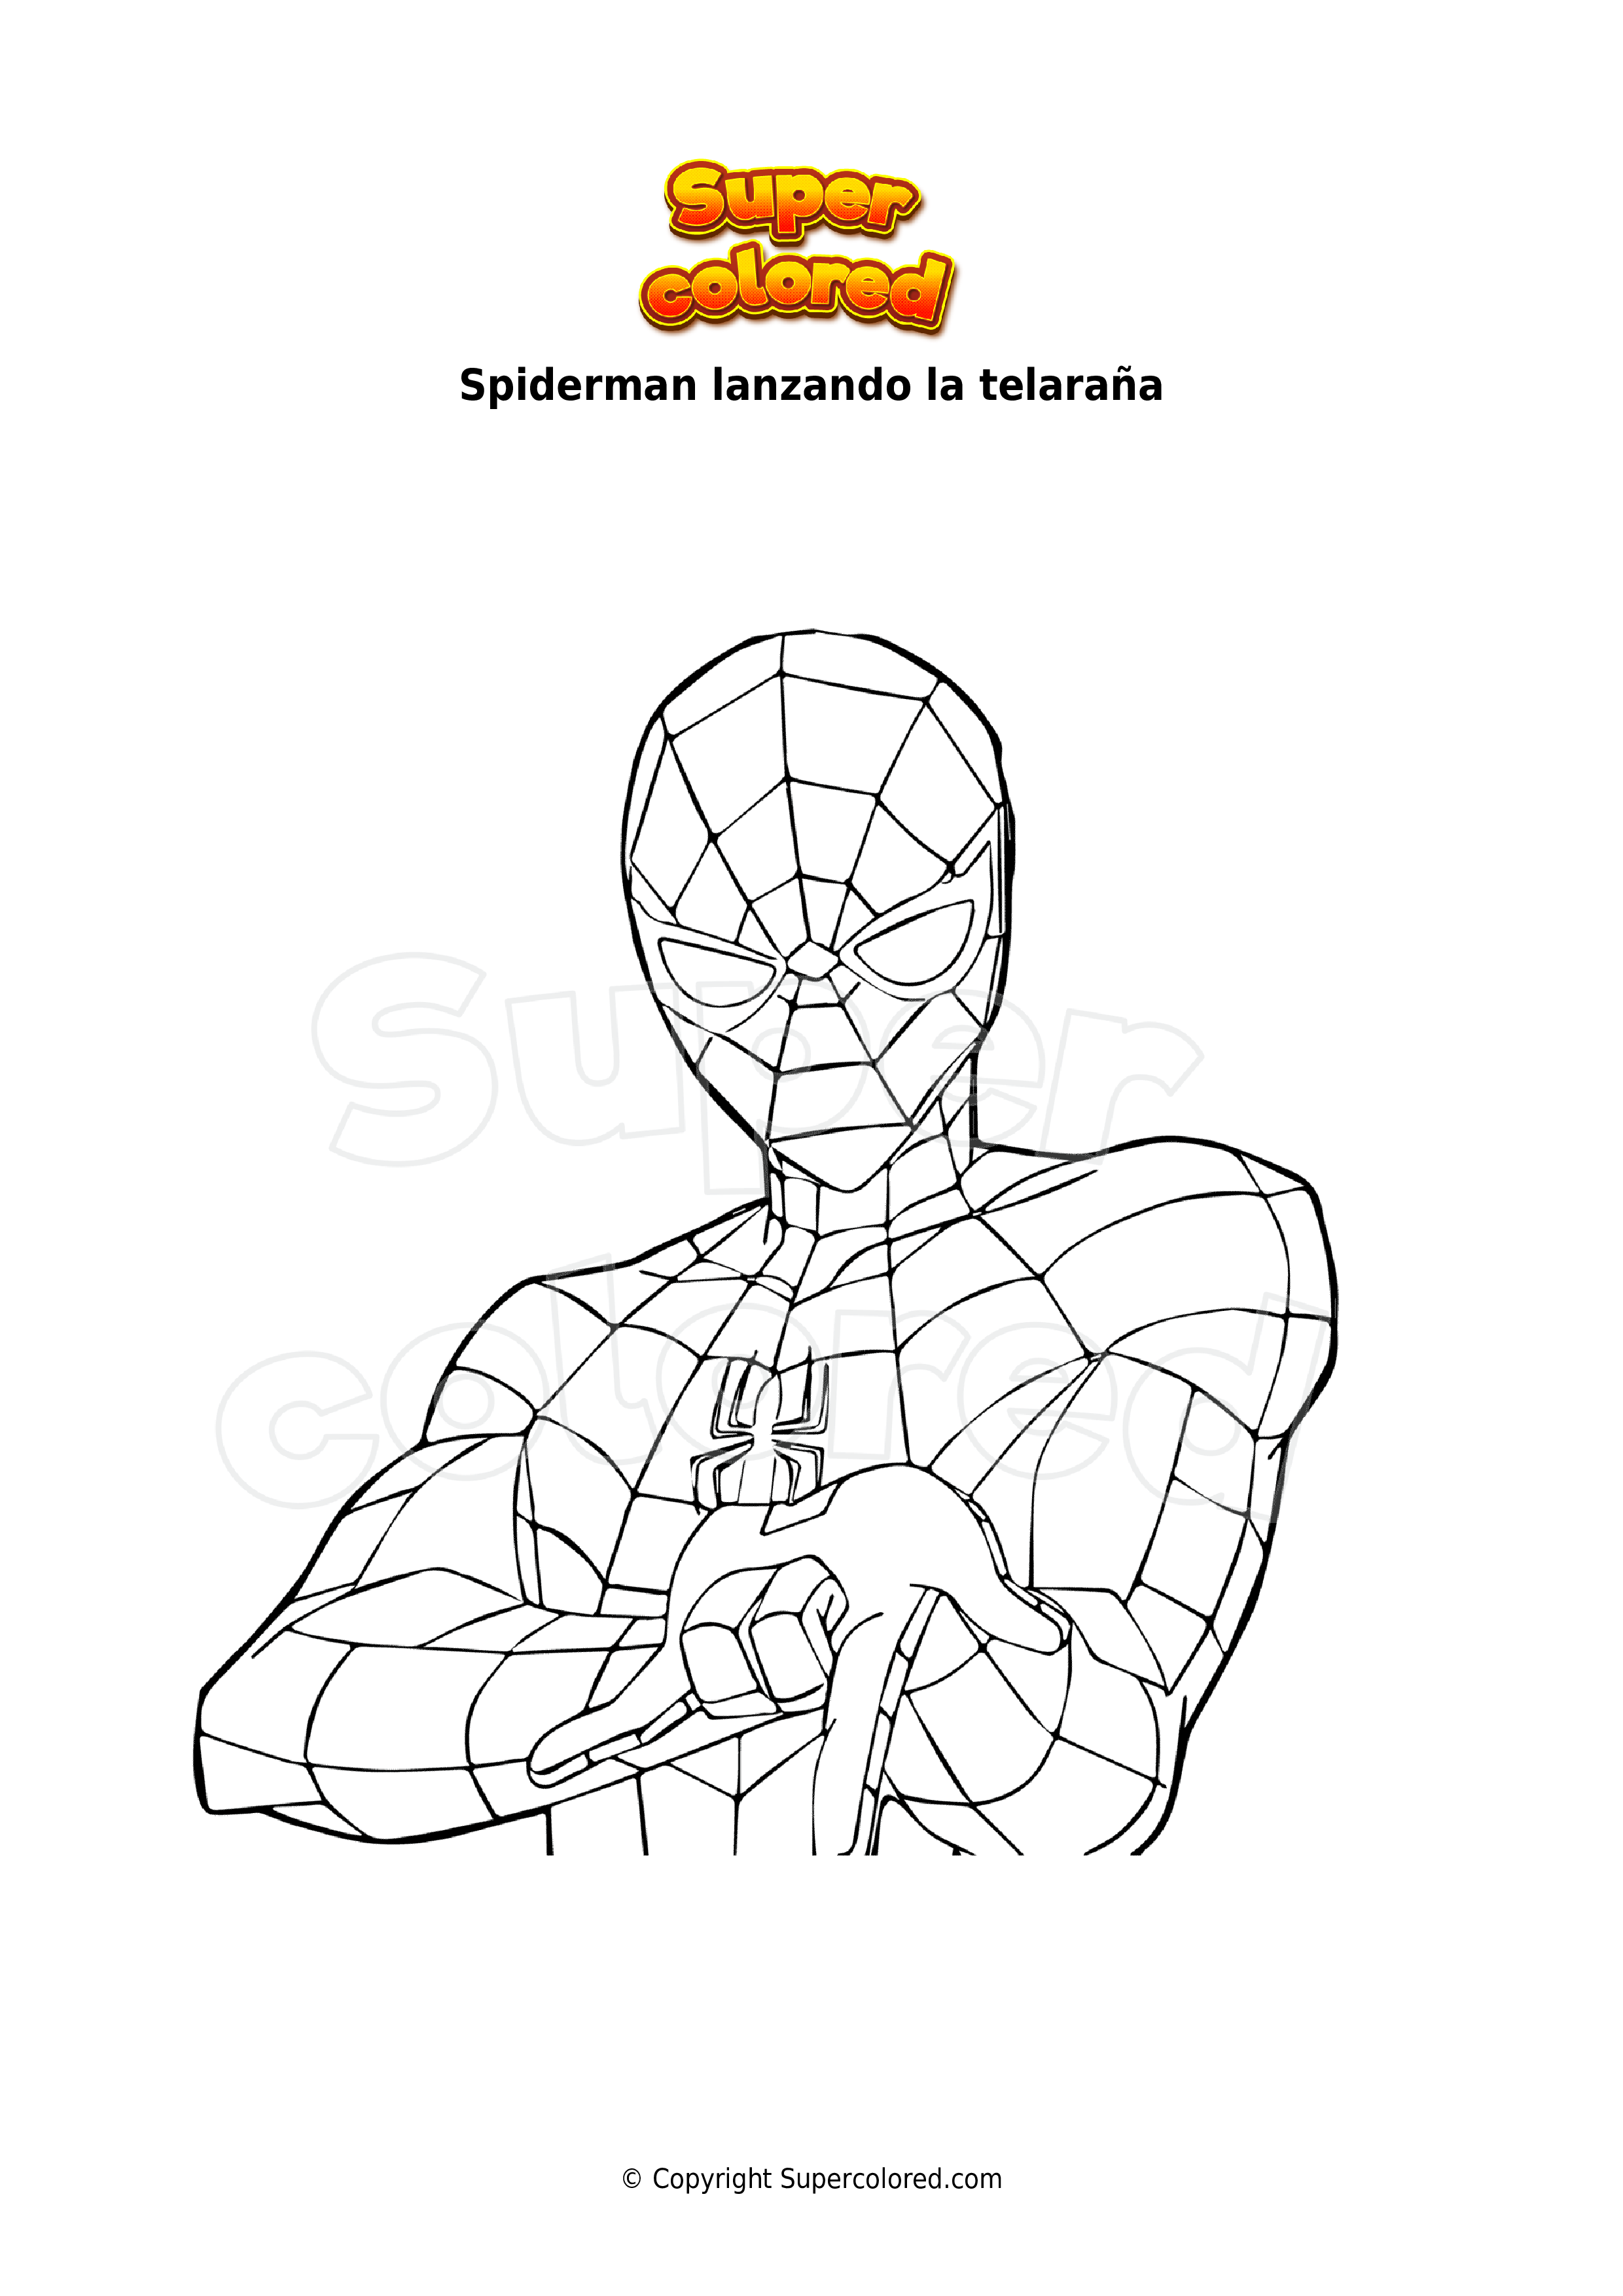 Dibujos Para Colorear - Spiderman - Supercolored